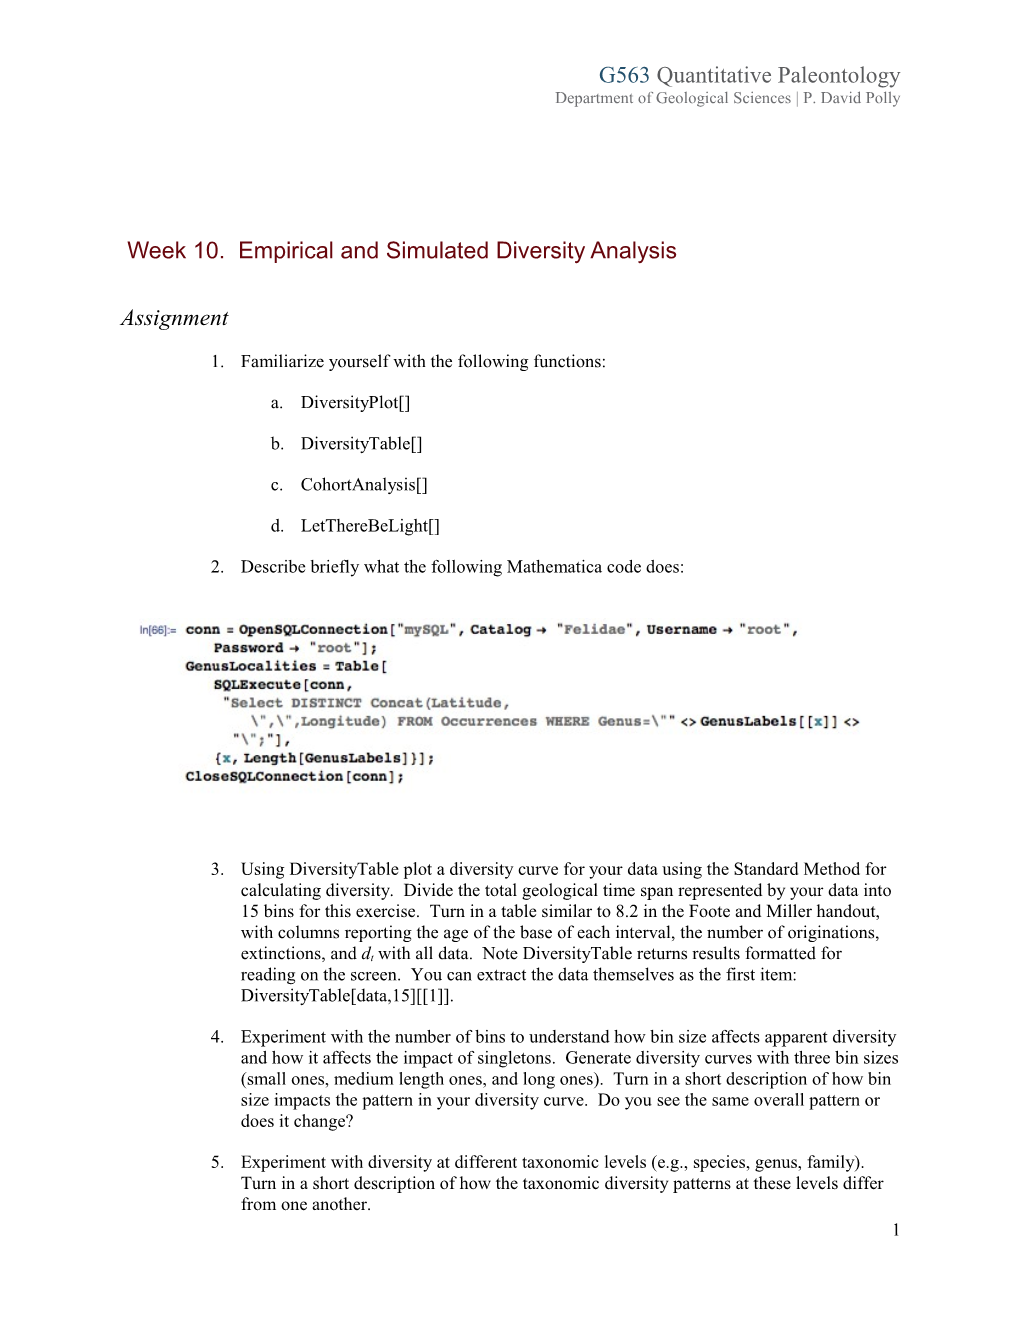 Week 10. Empirical and Simulated Diversity Analysis